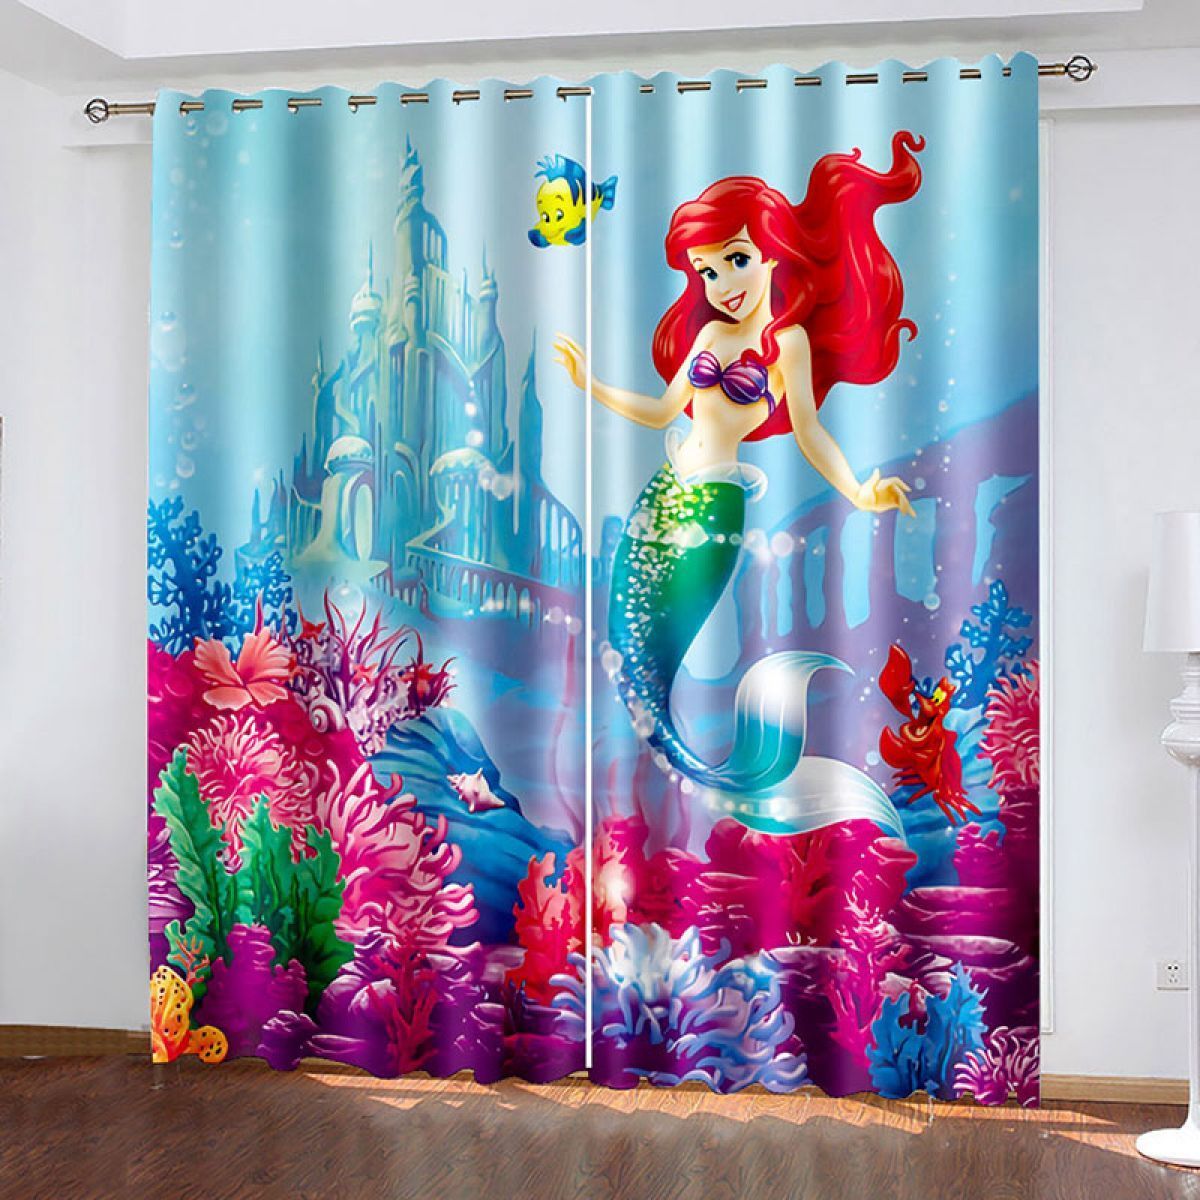 Disney's The Little Mermaid Printed Window Curtain Home Decor